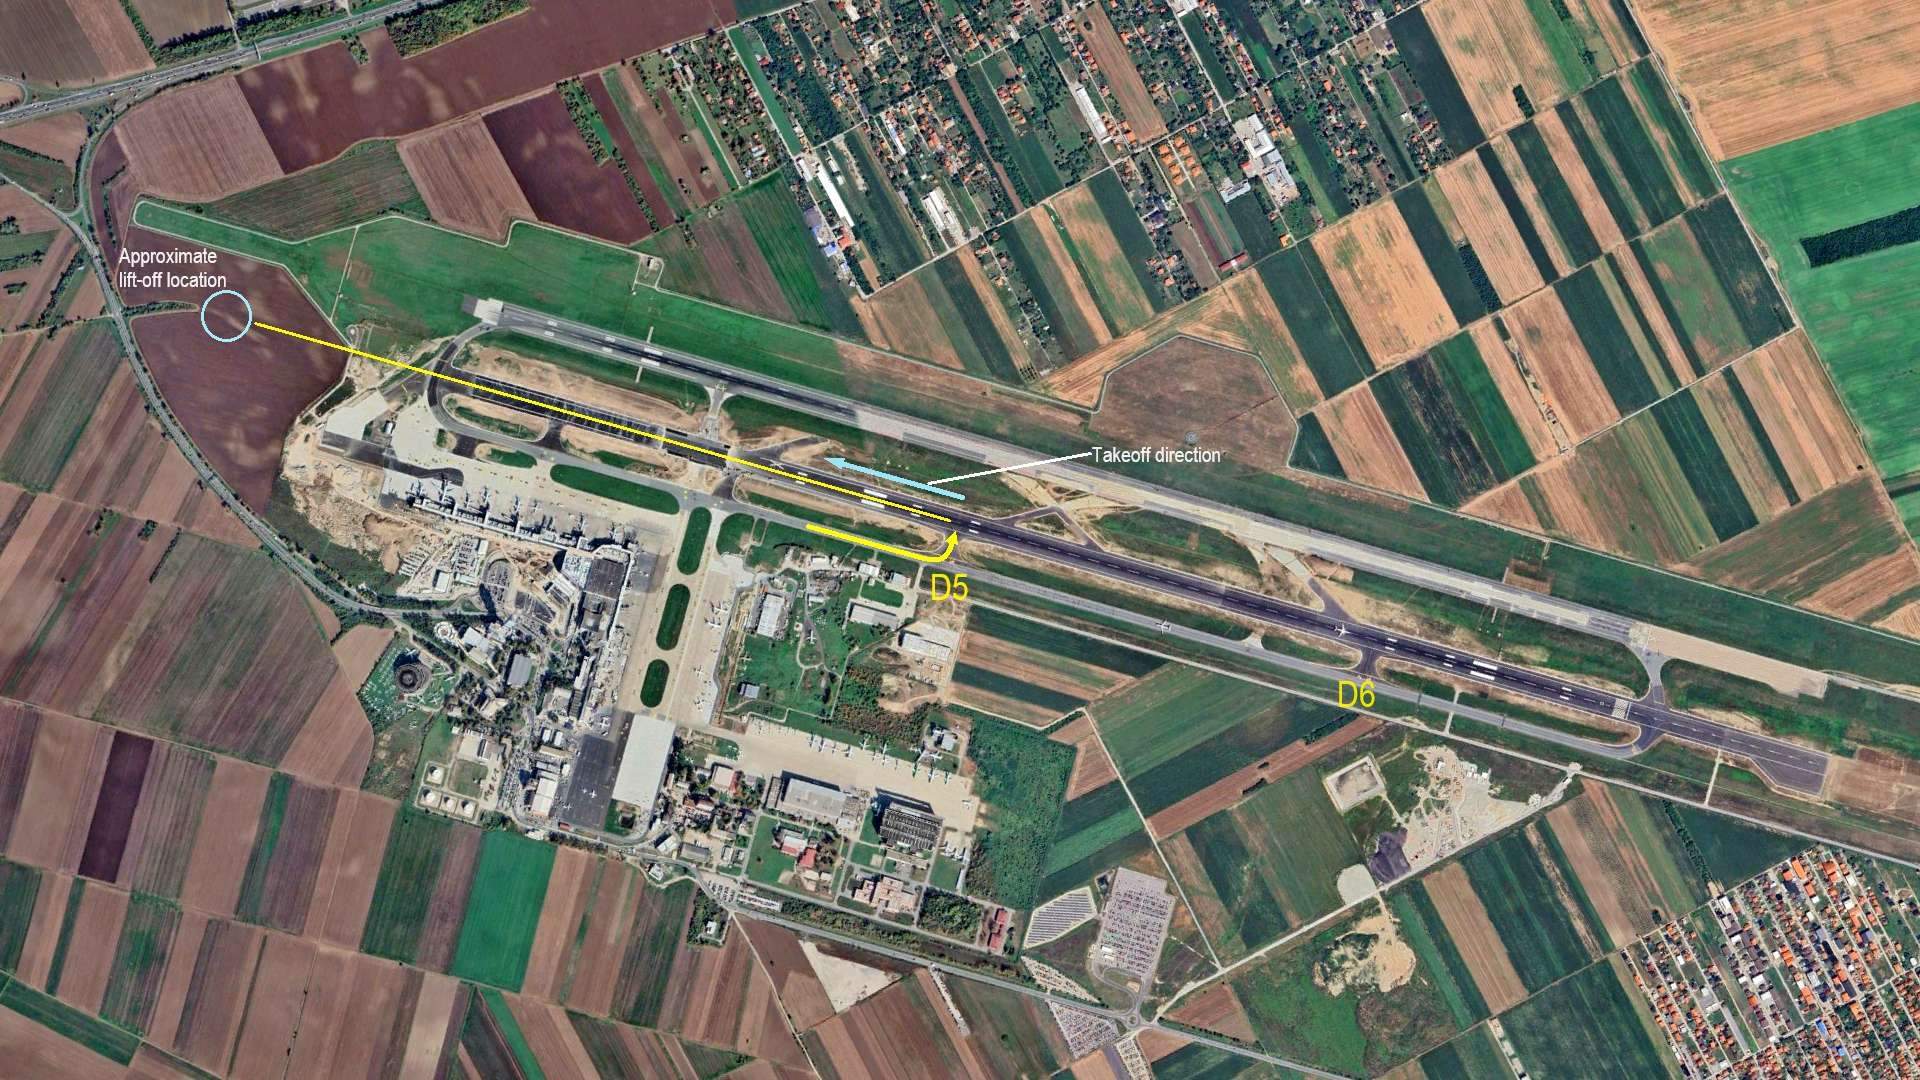 ACCIDENT: Air Serbia Embraer E195 Runway Overrun In Belgrade